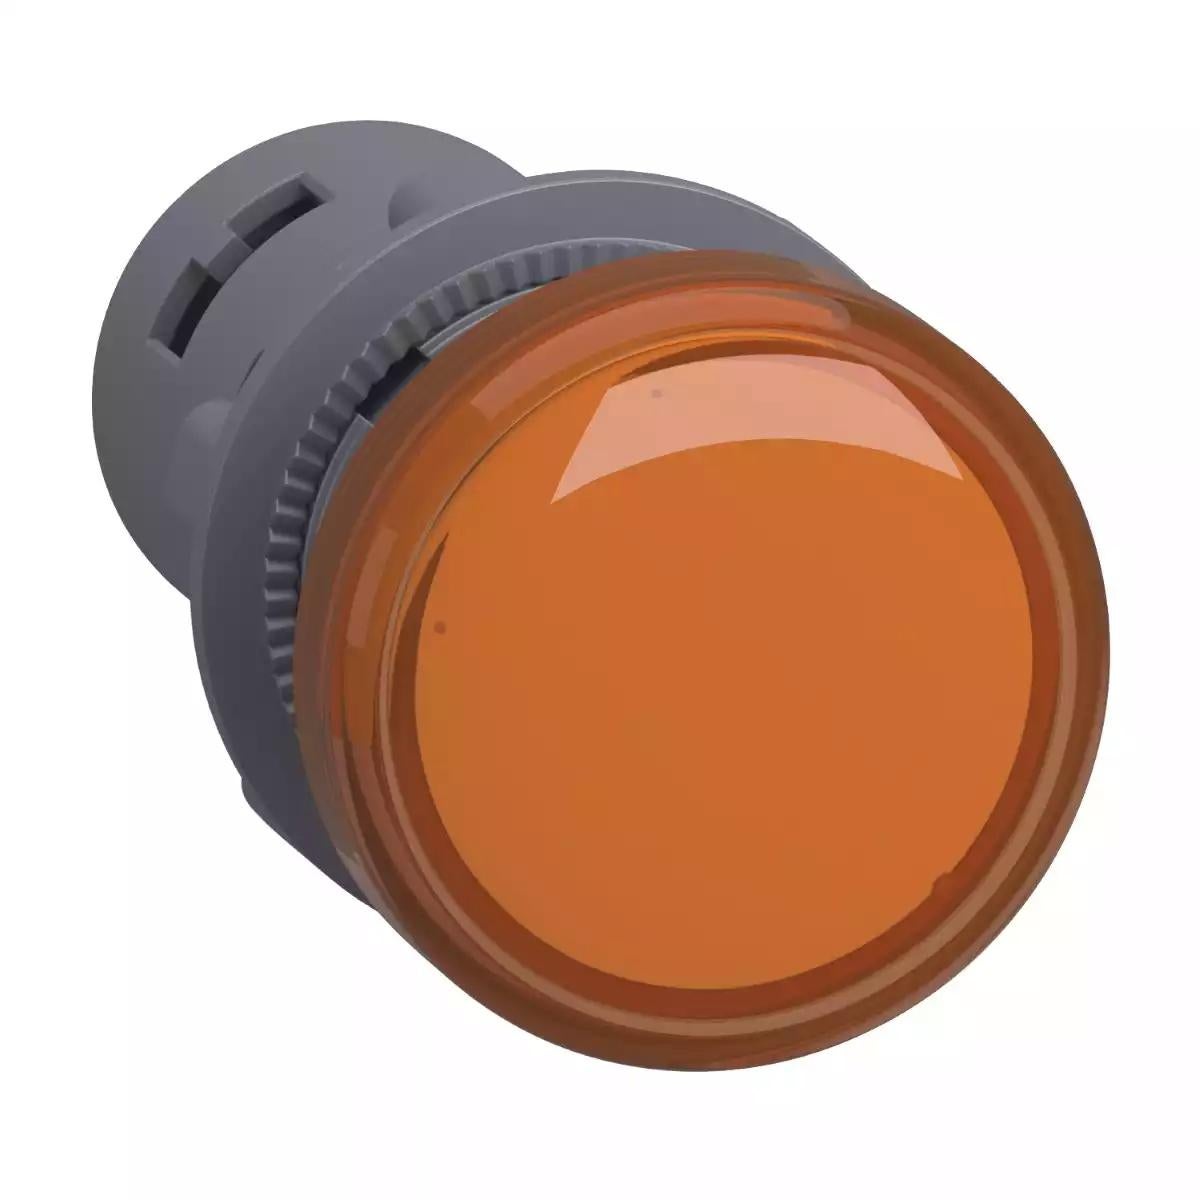 Pilot light, plastic, amber, Ø 22 mm, with integral LED, 220…230V AC, Anti-interference